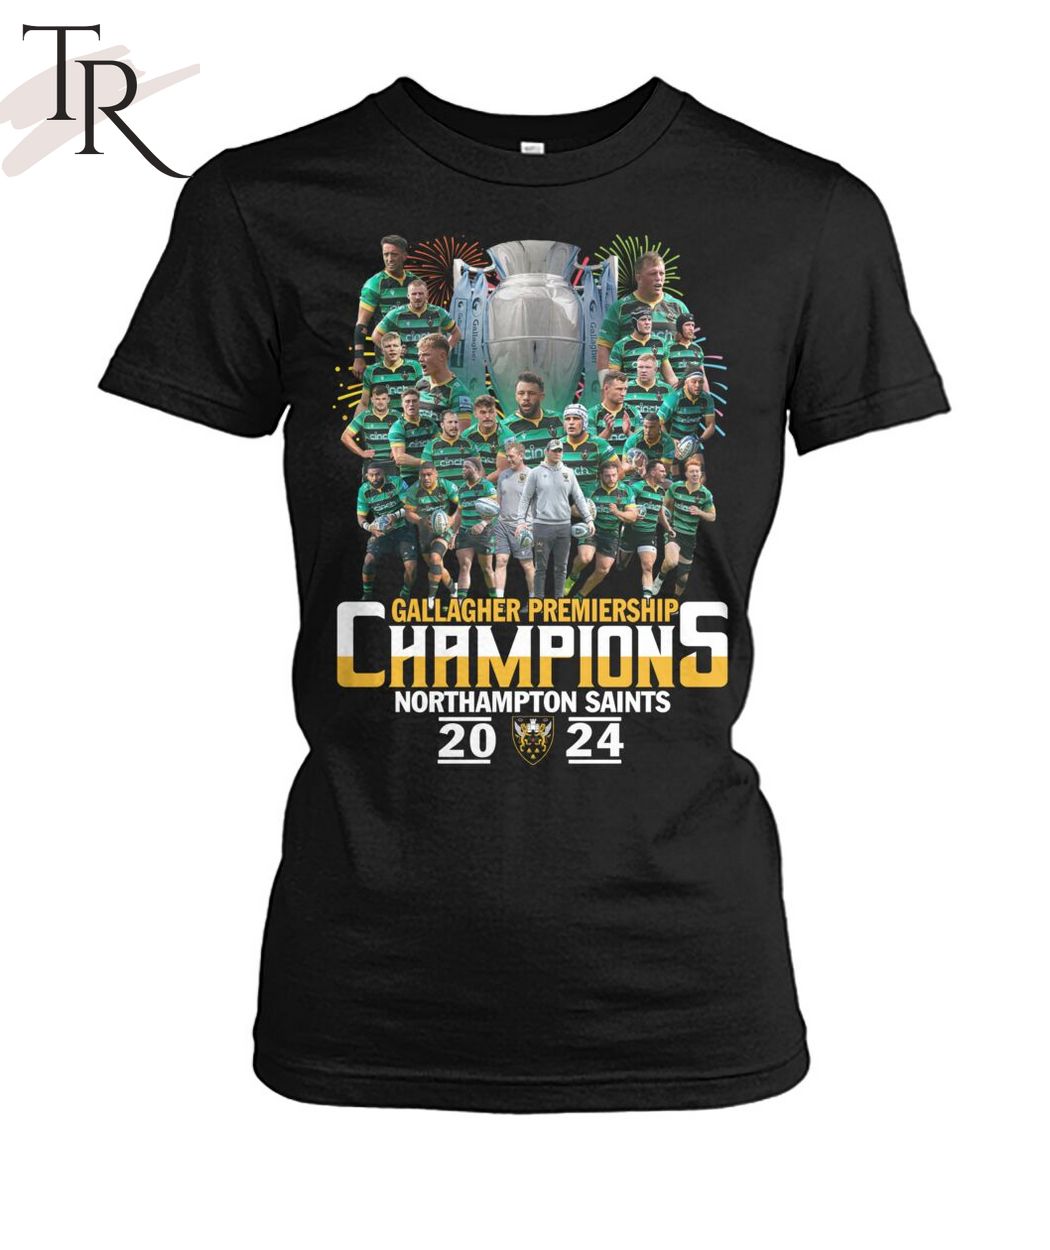 Gallagher Premiership Champions Northampton Saints 2024 T-Shirt